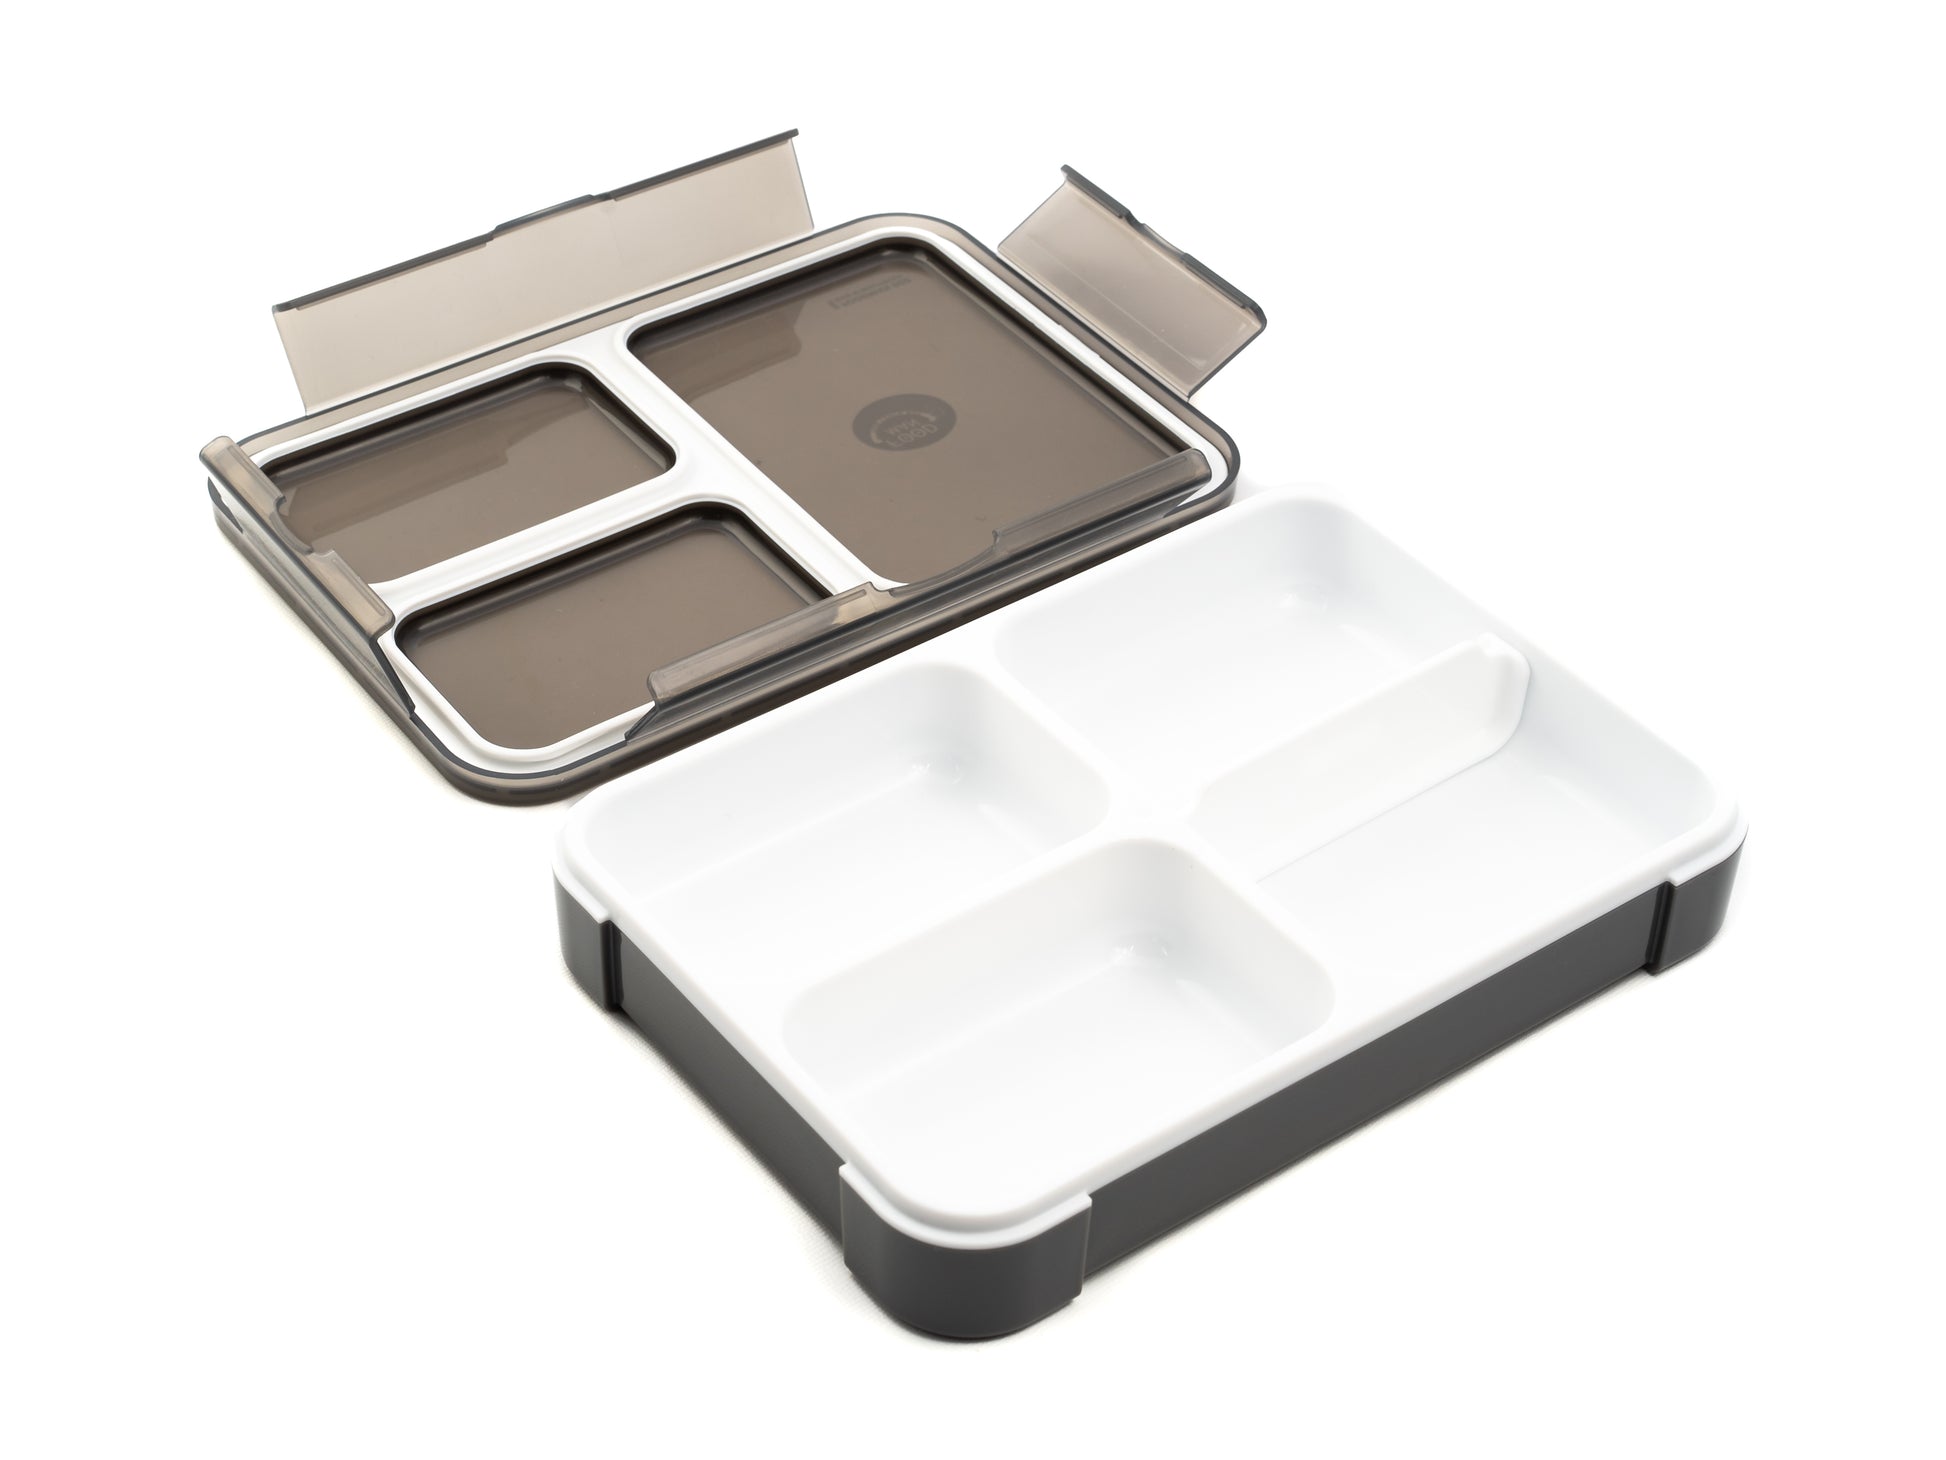 CB Japan Bento Box Case Beige Thin Bento Box Foodman Case 800ml DSK// Lunch  box 